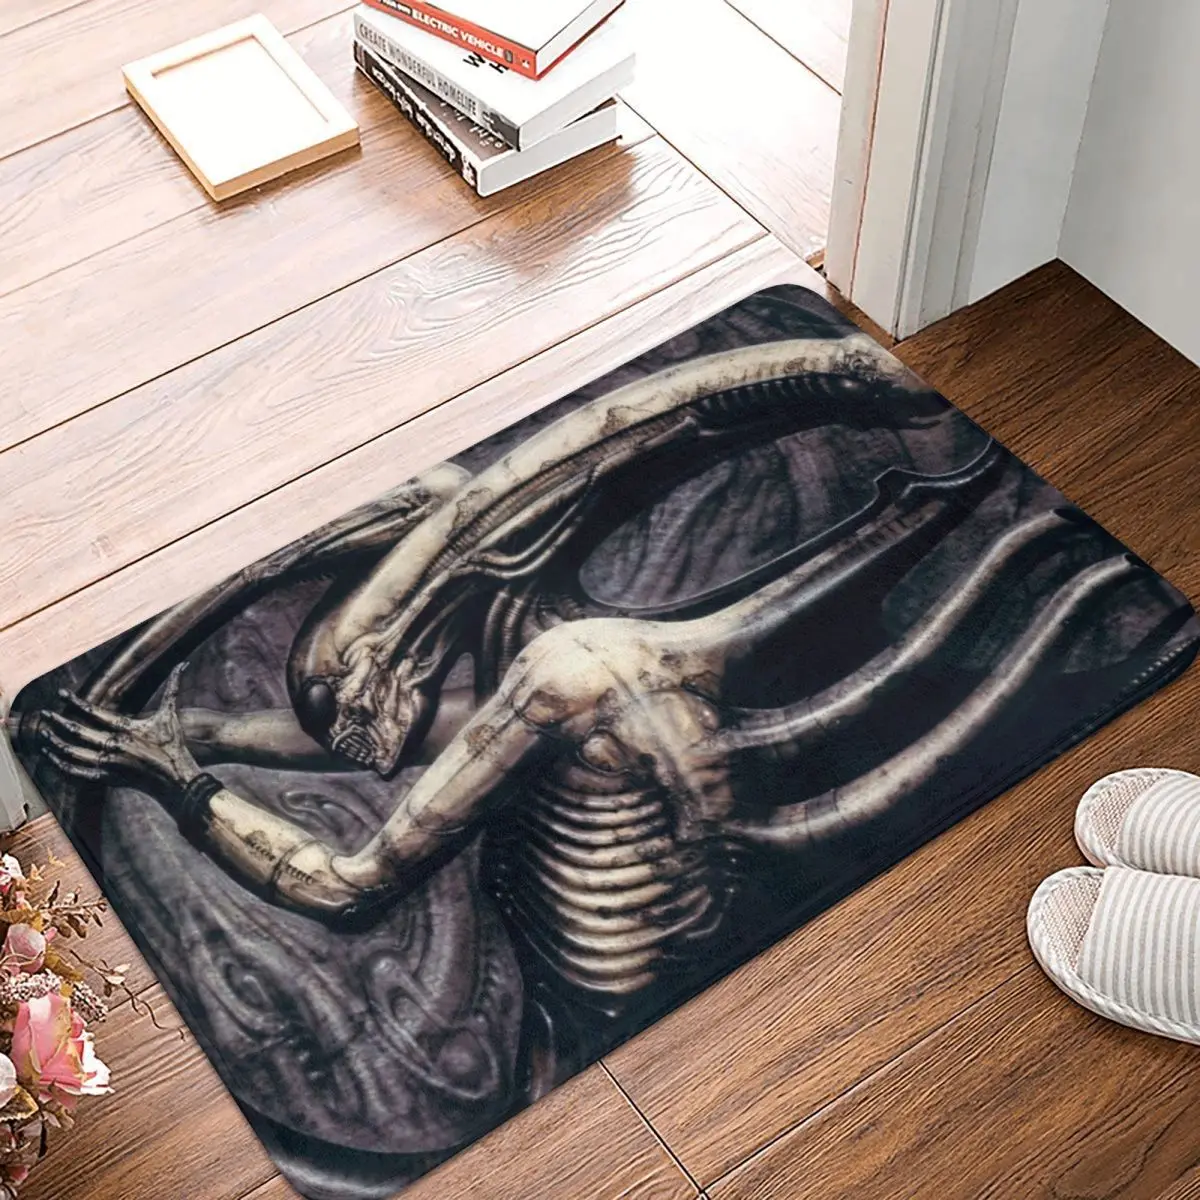 

Alien Xenomorph HR Giger Doormat Rug carpet Mat Footpad Polyester Anti-slip Cushion Floor Mat Entrance Kitchen Foot Pad